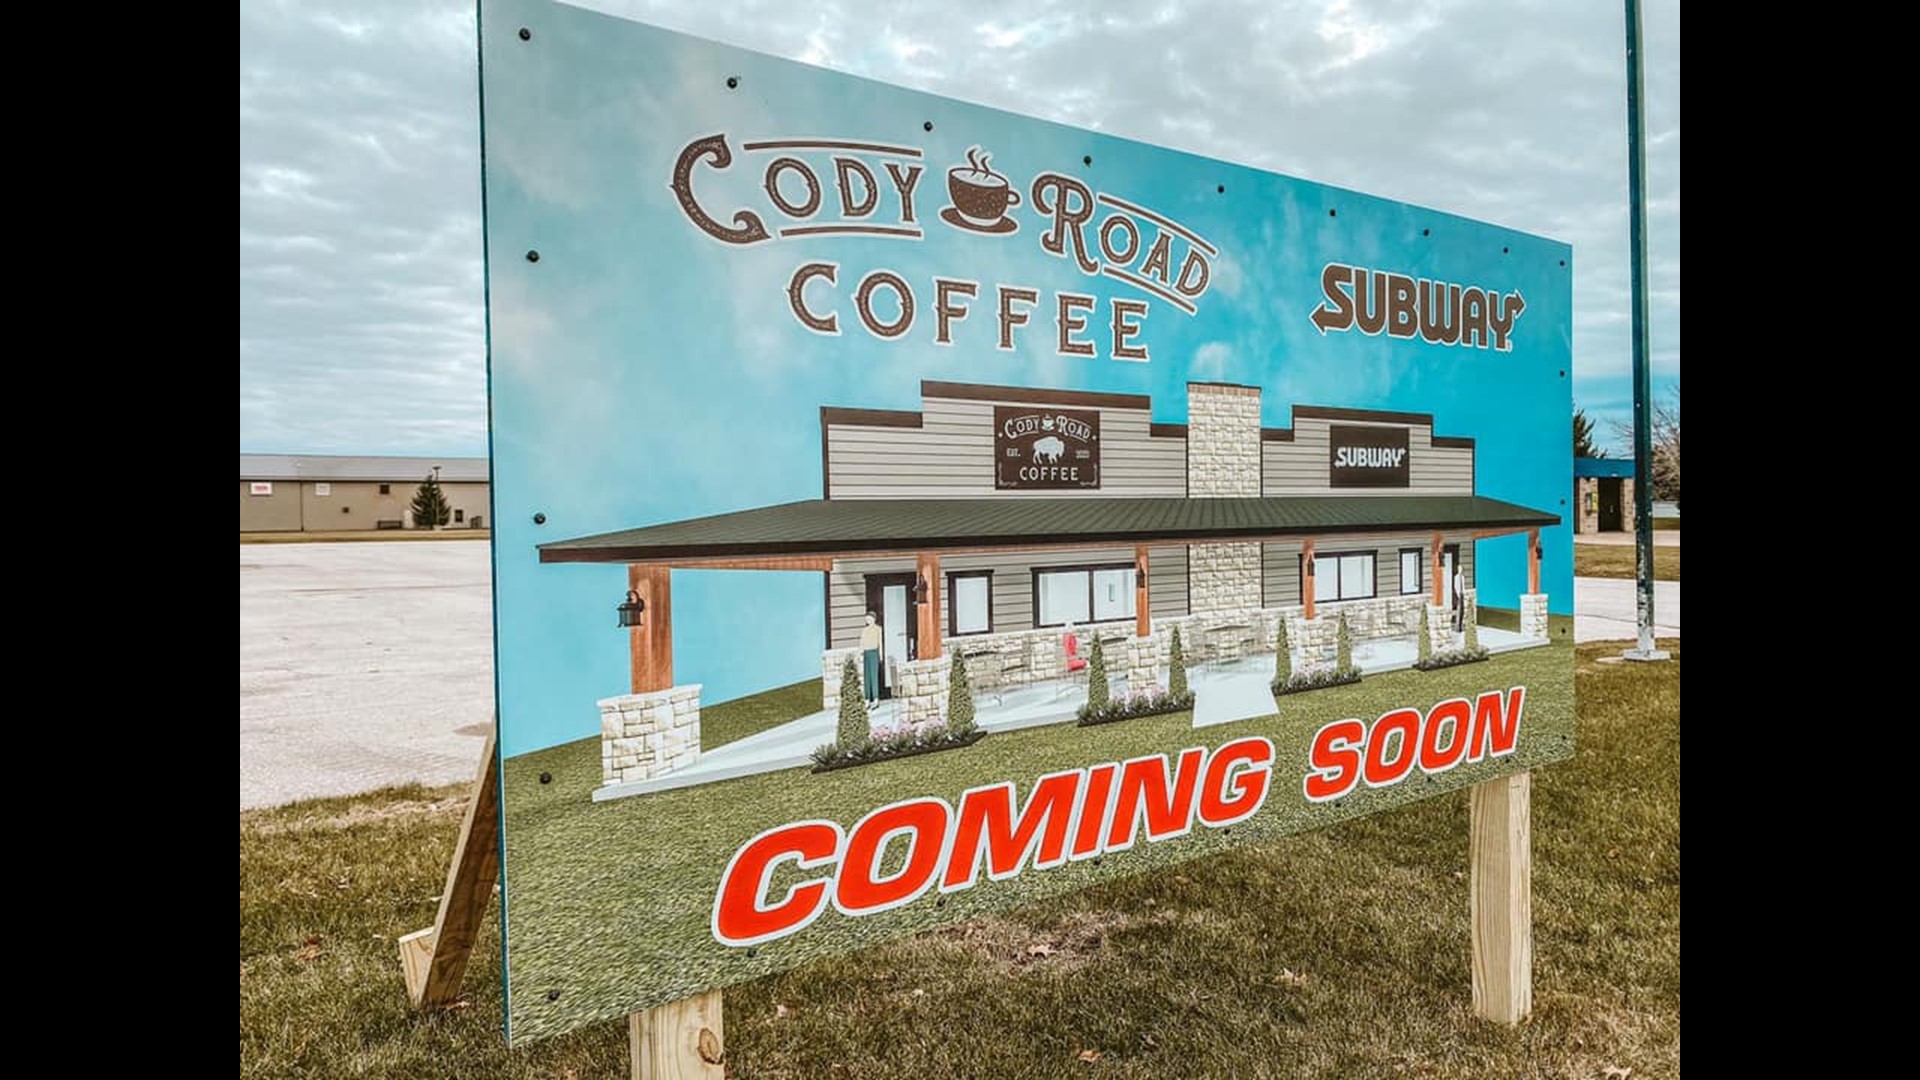 Cody Road Coffee is opening its second location in Eldridge!